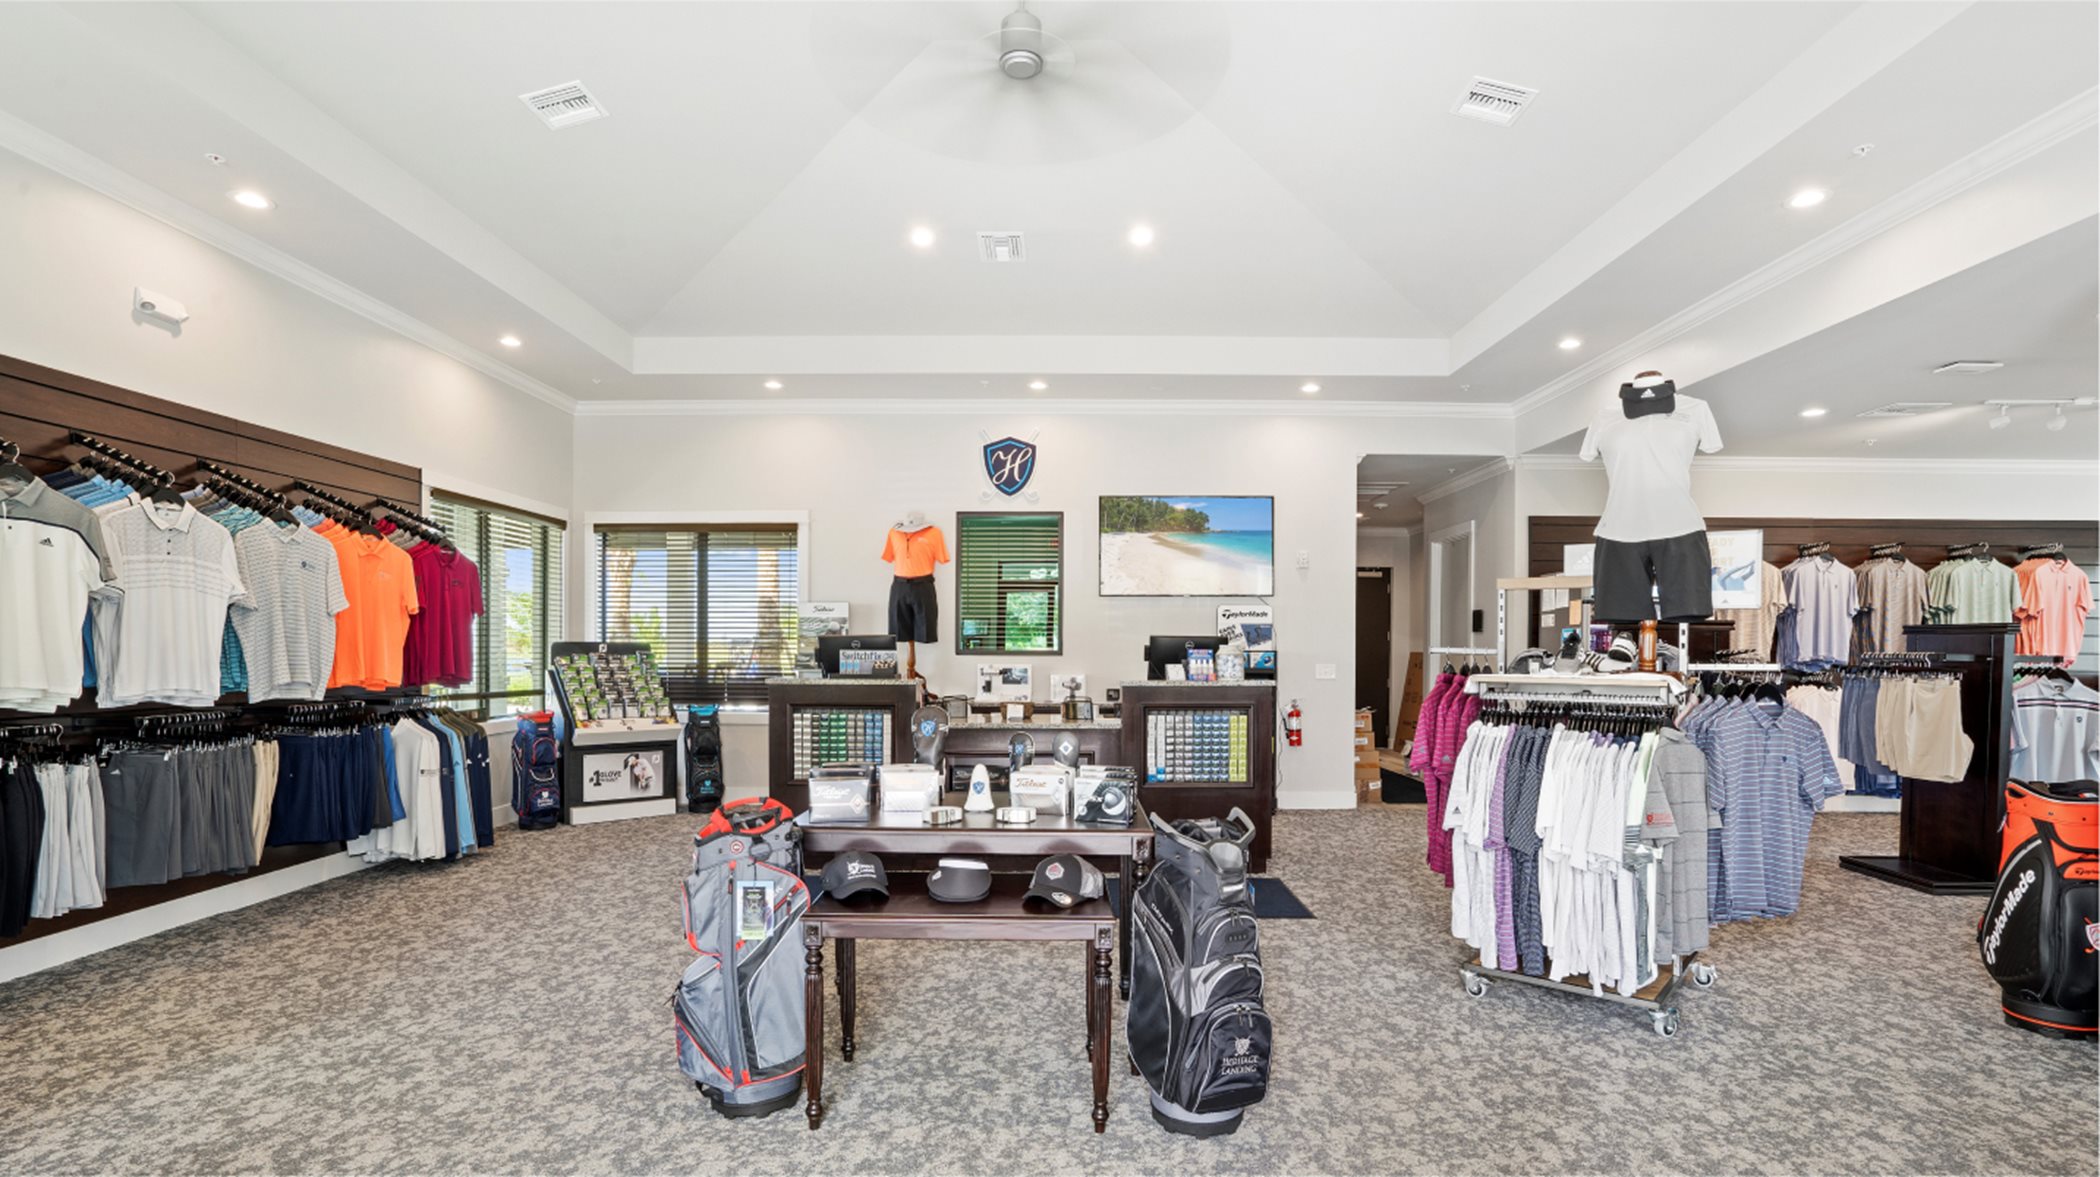 Heritage Landing Golf course pro shop interior